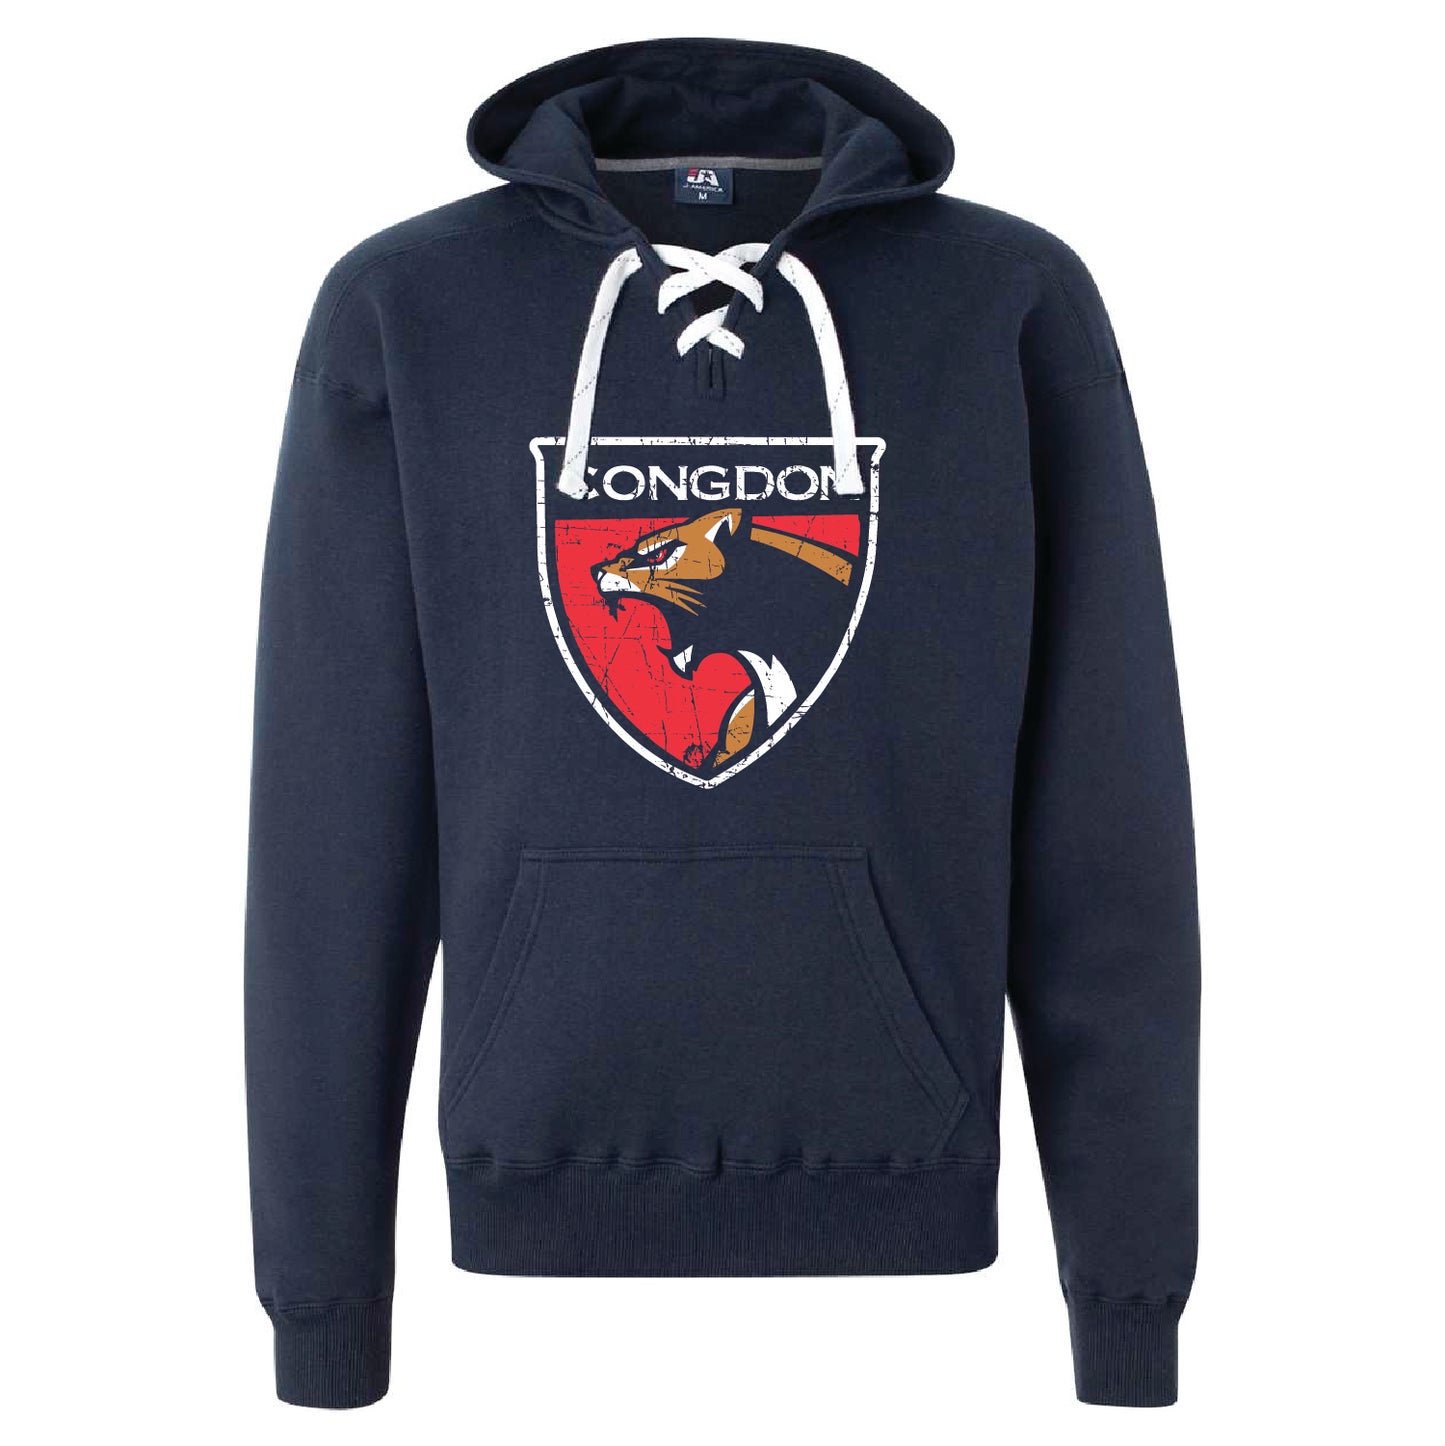 Congdon Unisex Sport Lace Hooded Sweatshirt